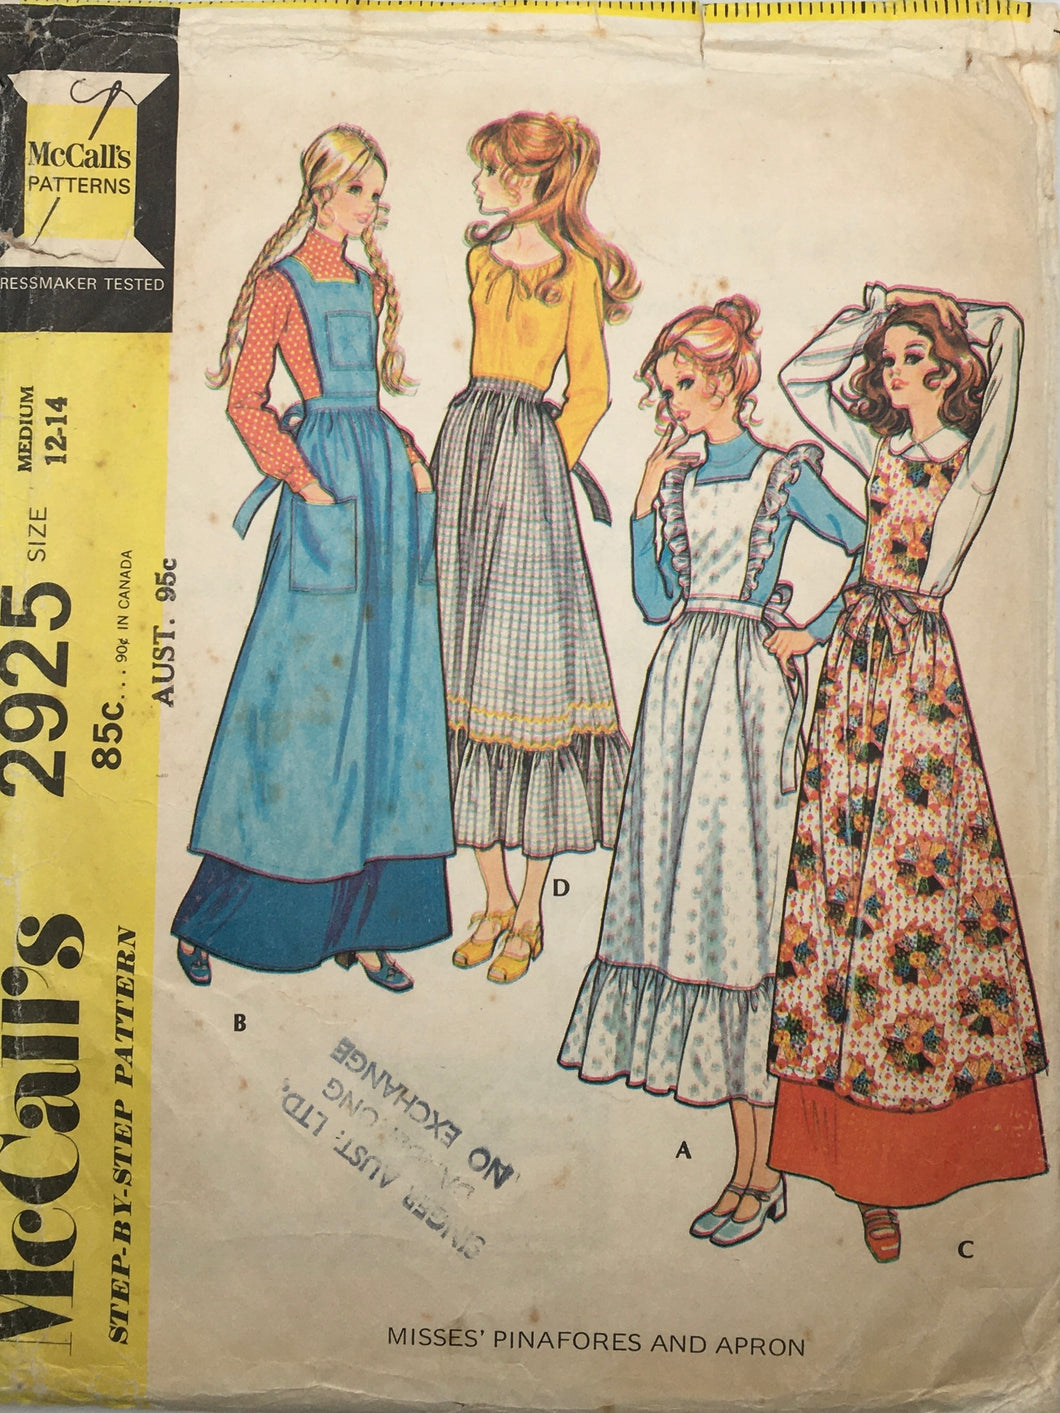 1971 Vintage Sewing Pattern: McCalls 2925